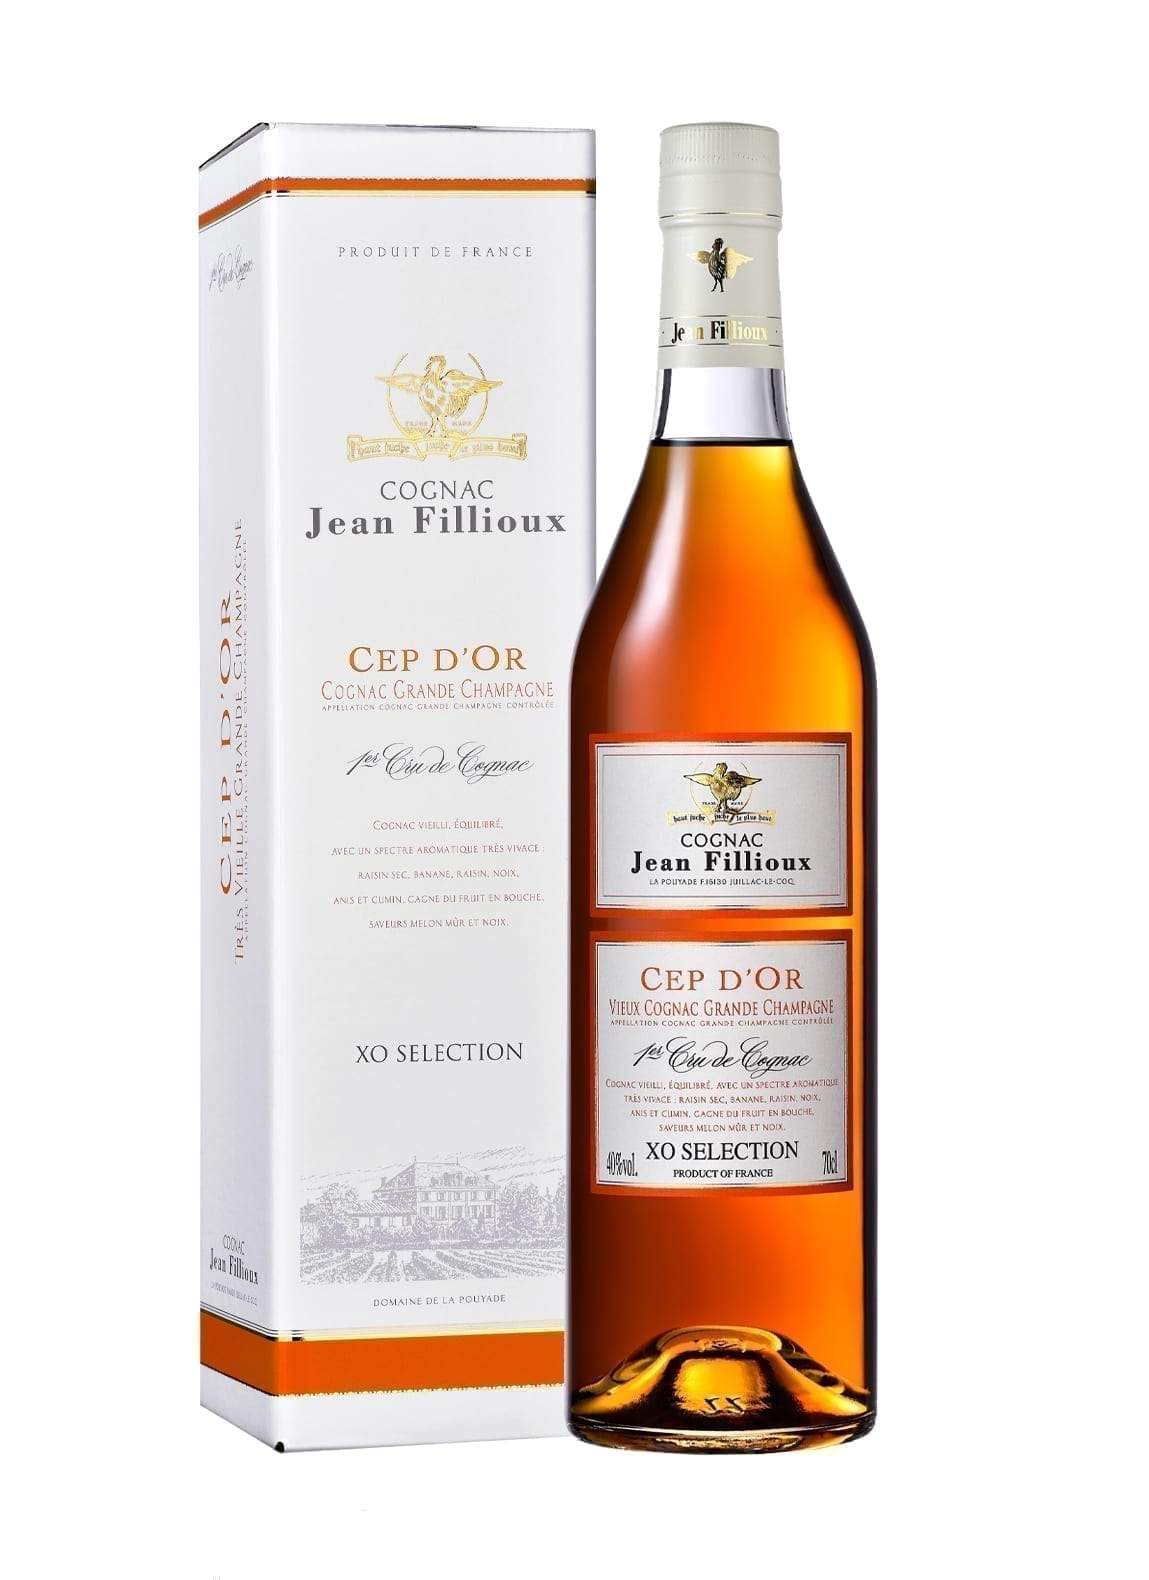 Jean Fillioux Cognac 'Cep d'Or' XO Grande Champagne 1er Cru 13-15 years 40% 700ml | Brandy | Shop online at Spirits of France